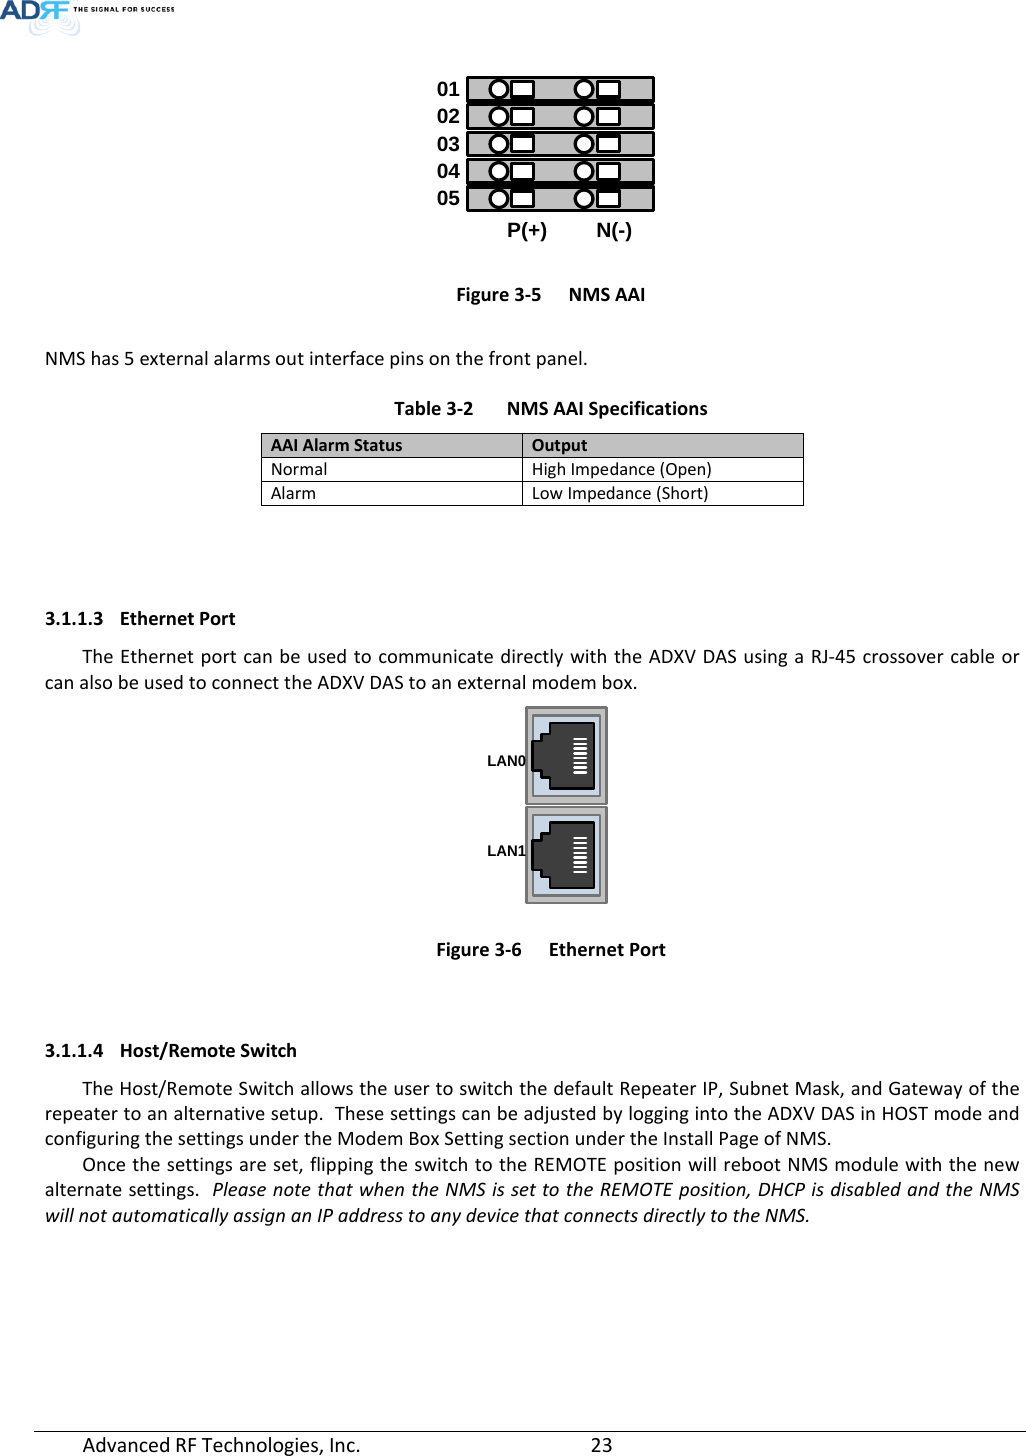 Page 23 of ADRF KOREA ADXV-R-336 DAS (Distributed Antenna System) User Manual ADXV DAS